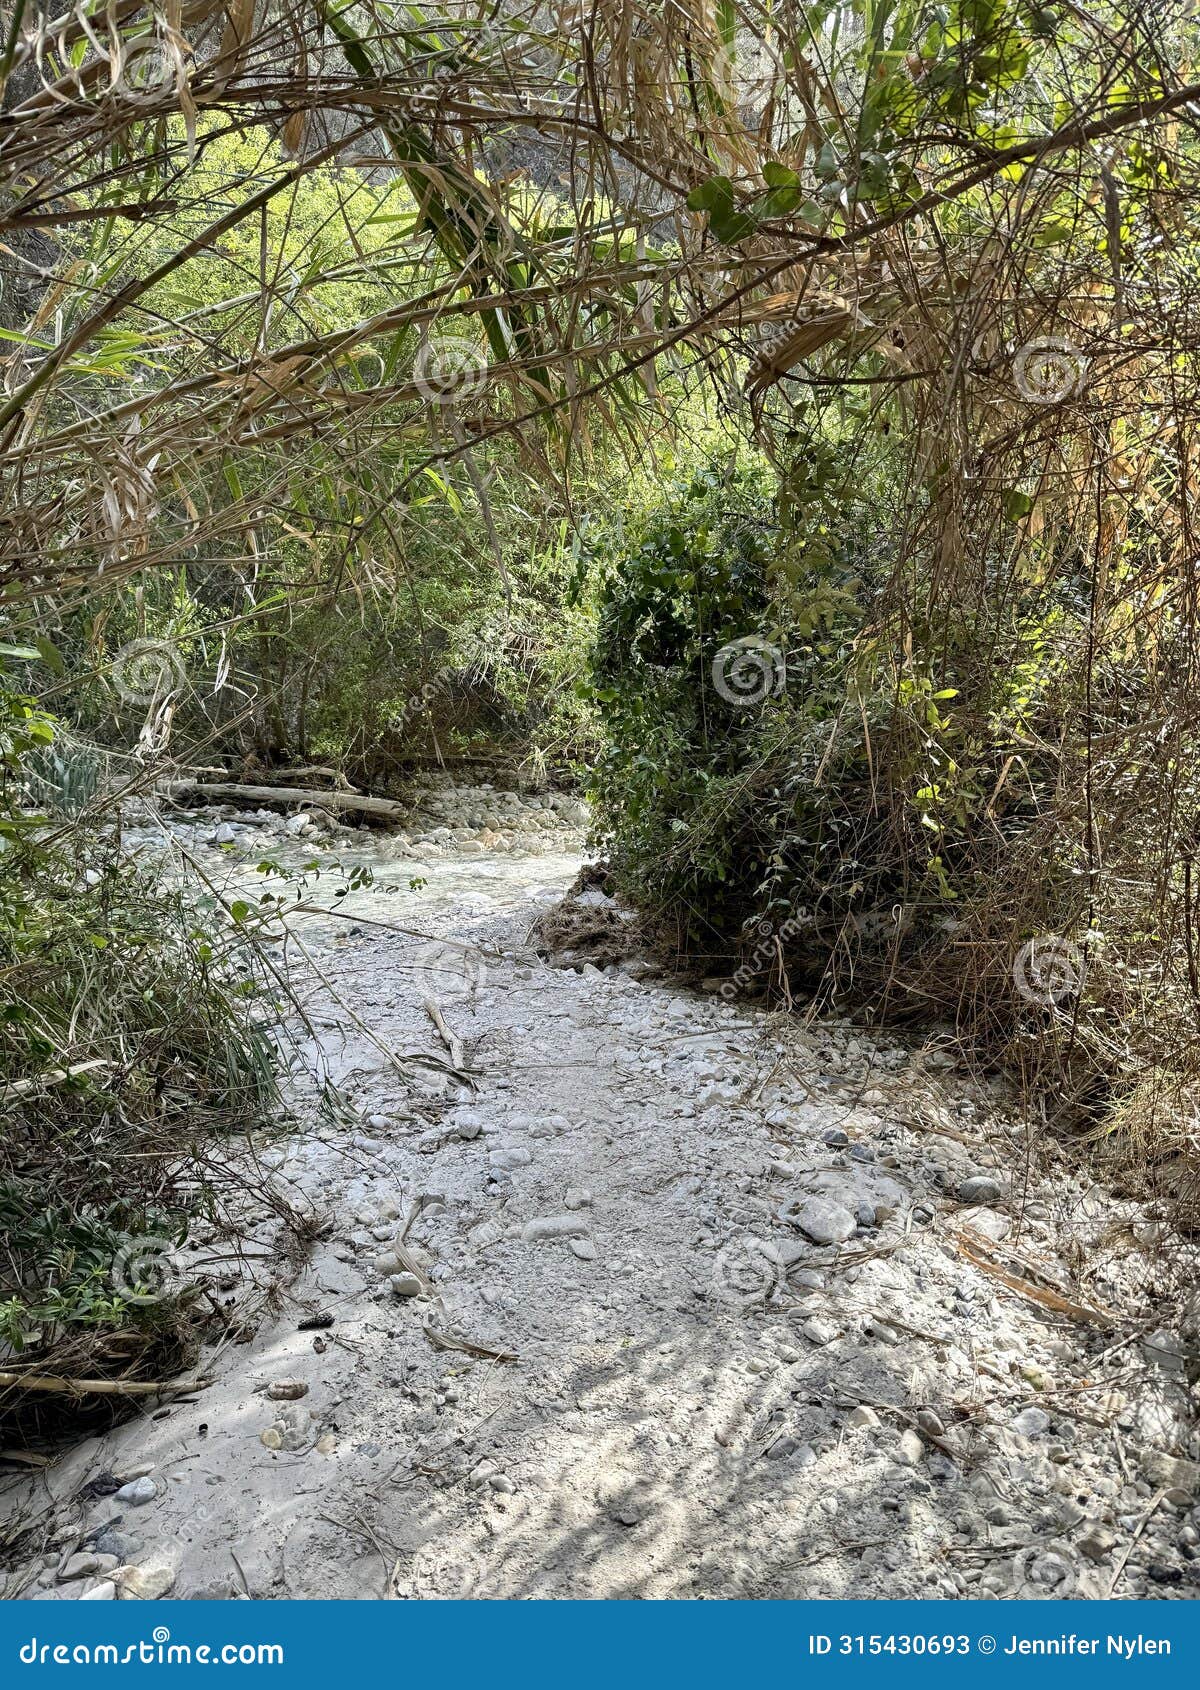 rio chillar, water hiking trail in nerja, spain